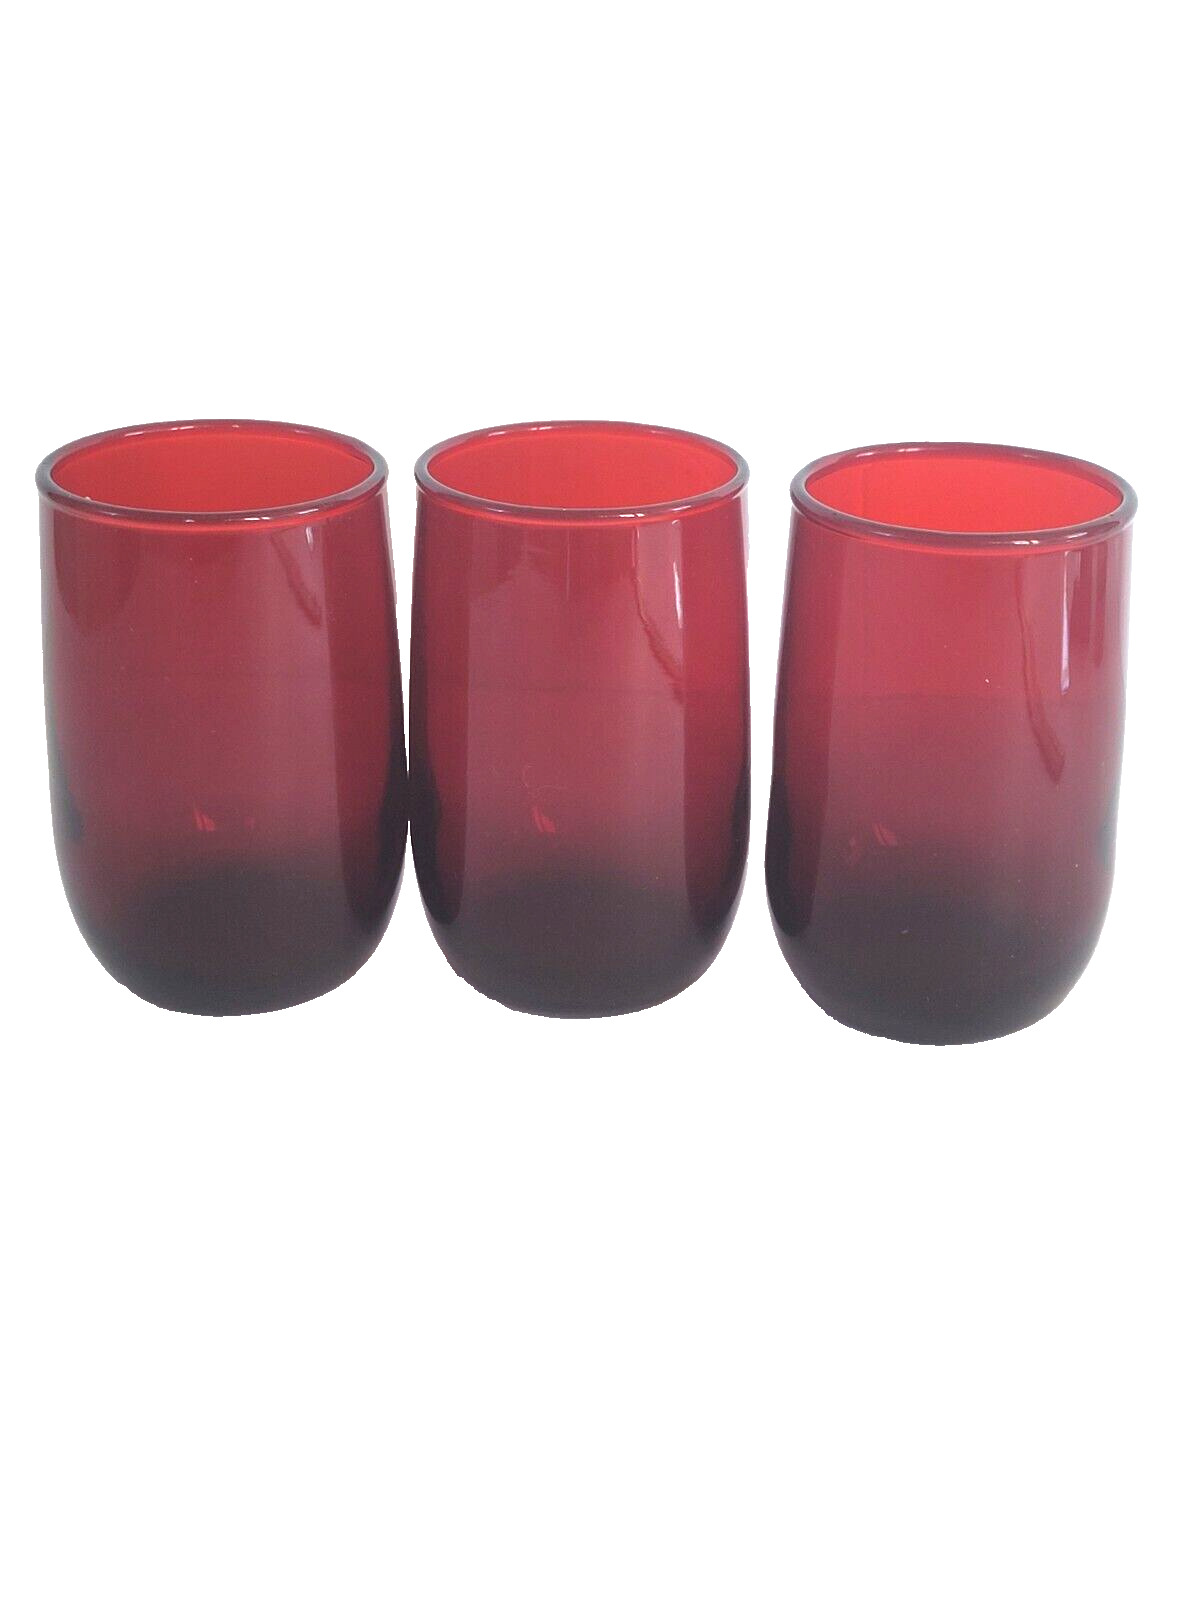 Vtg Anchor Hocking Royal Ruby Red Roly Poly 5 oz Juice Glasses 3pc Set